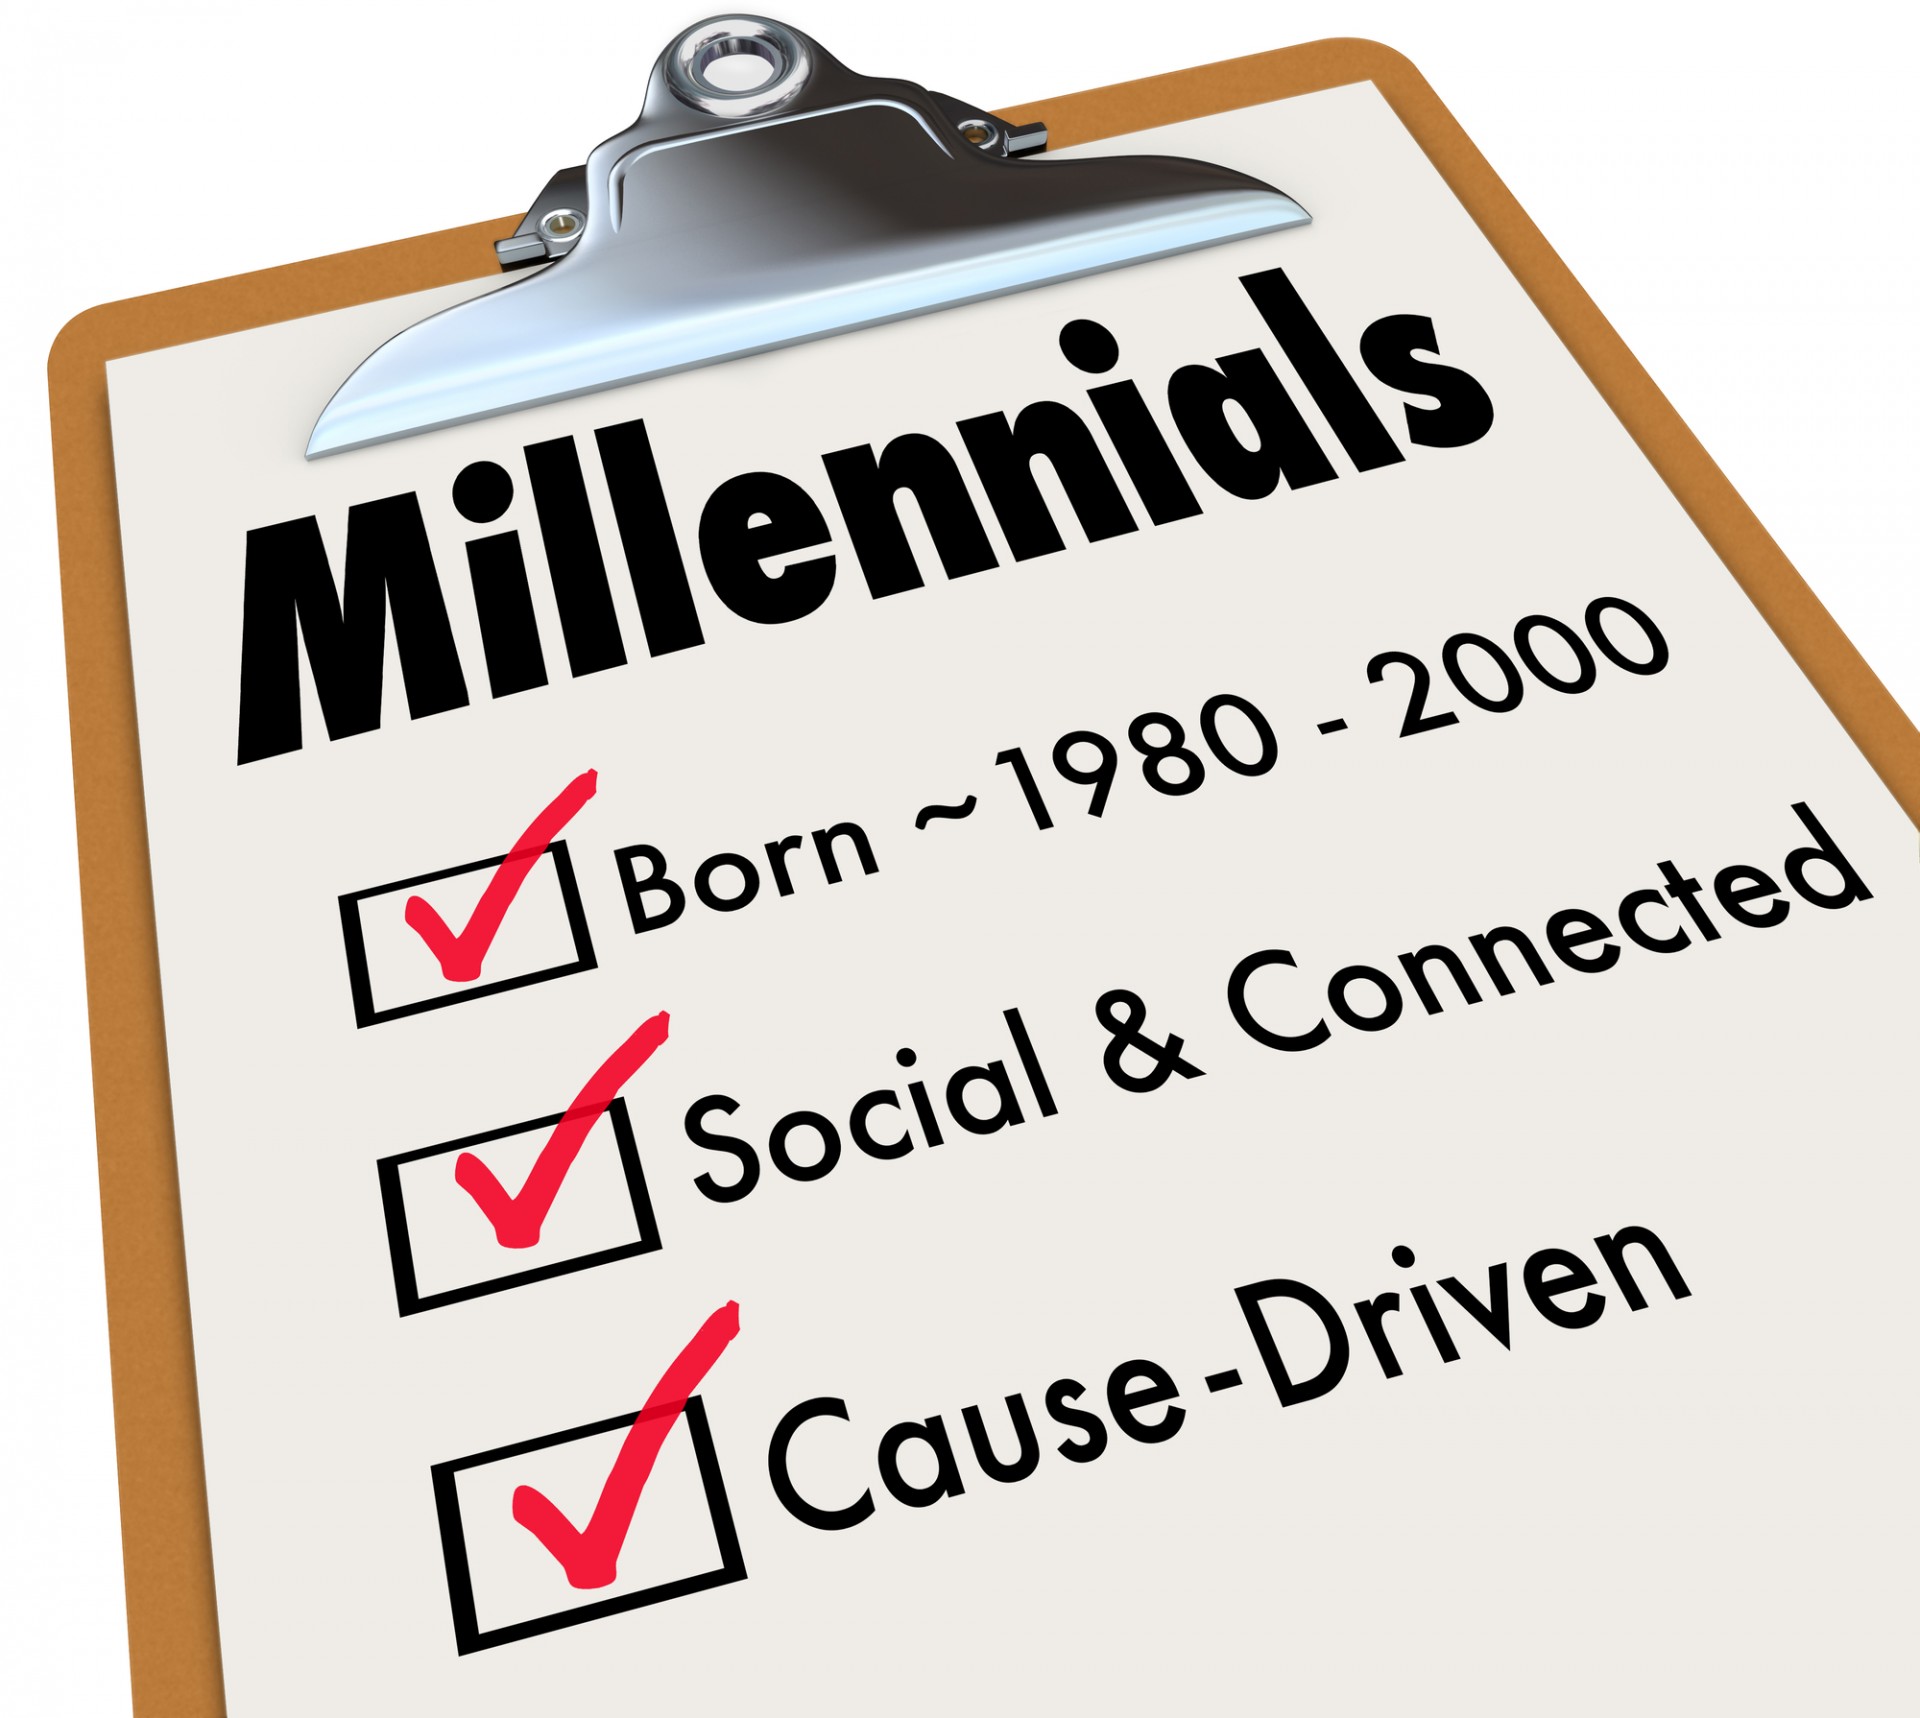 How to market to millennials